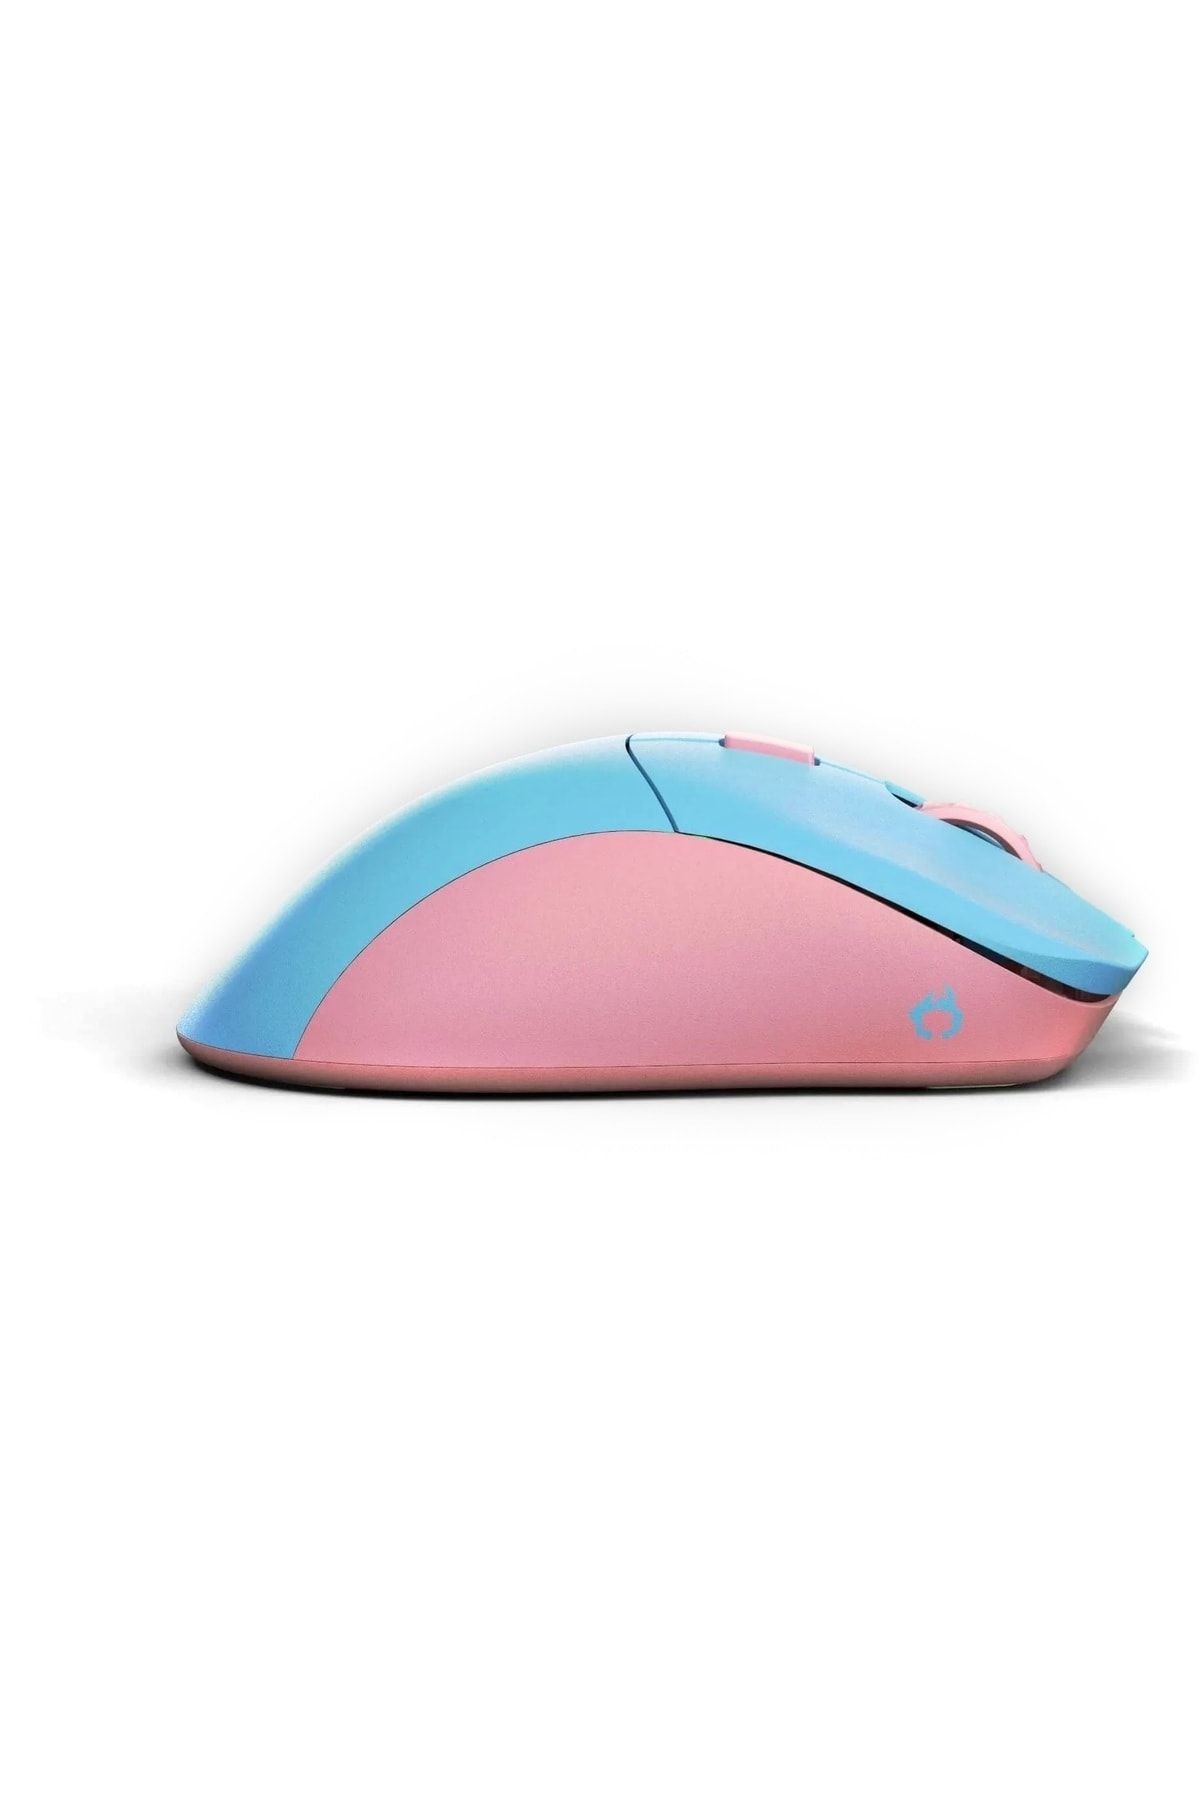 Glorious Model D Uyumlu Pro Skyline Kablosuz Pembe/Mavi Gaming Mouse